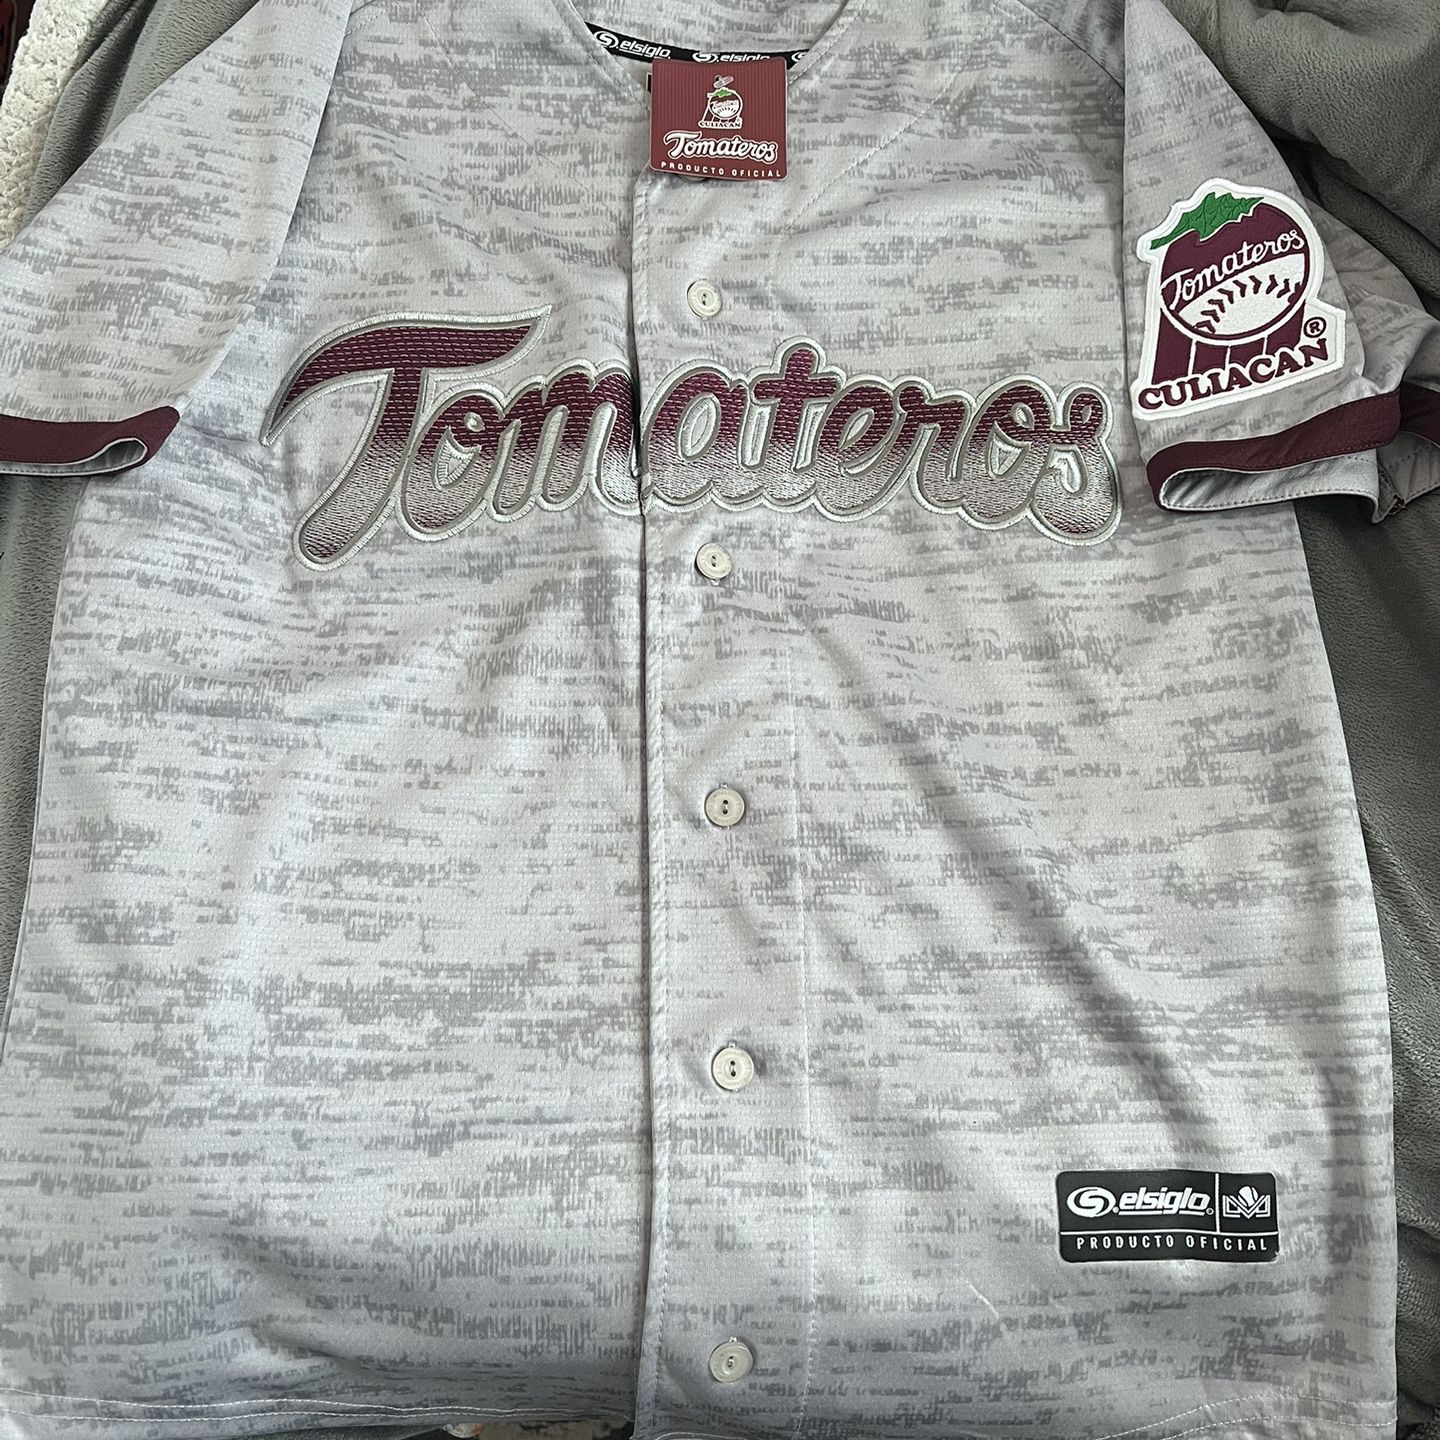 Arrieta Tomateros De Culiacan LMB Baseball Jersey L for Sale in Chula  Vista, CA - OfferUp